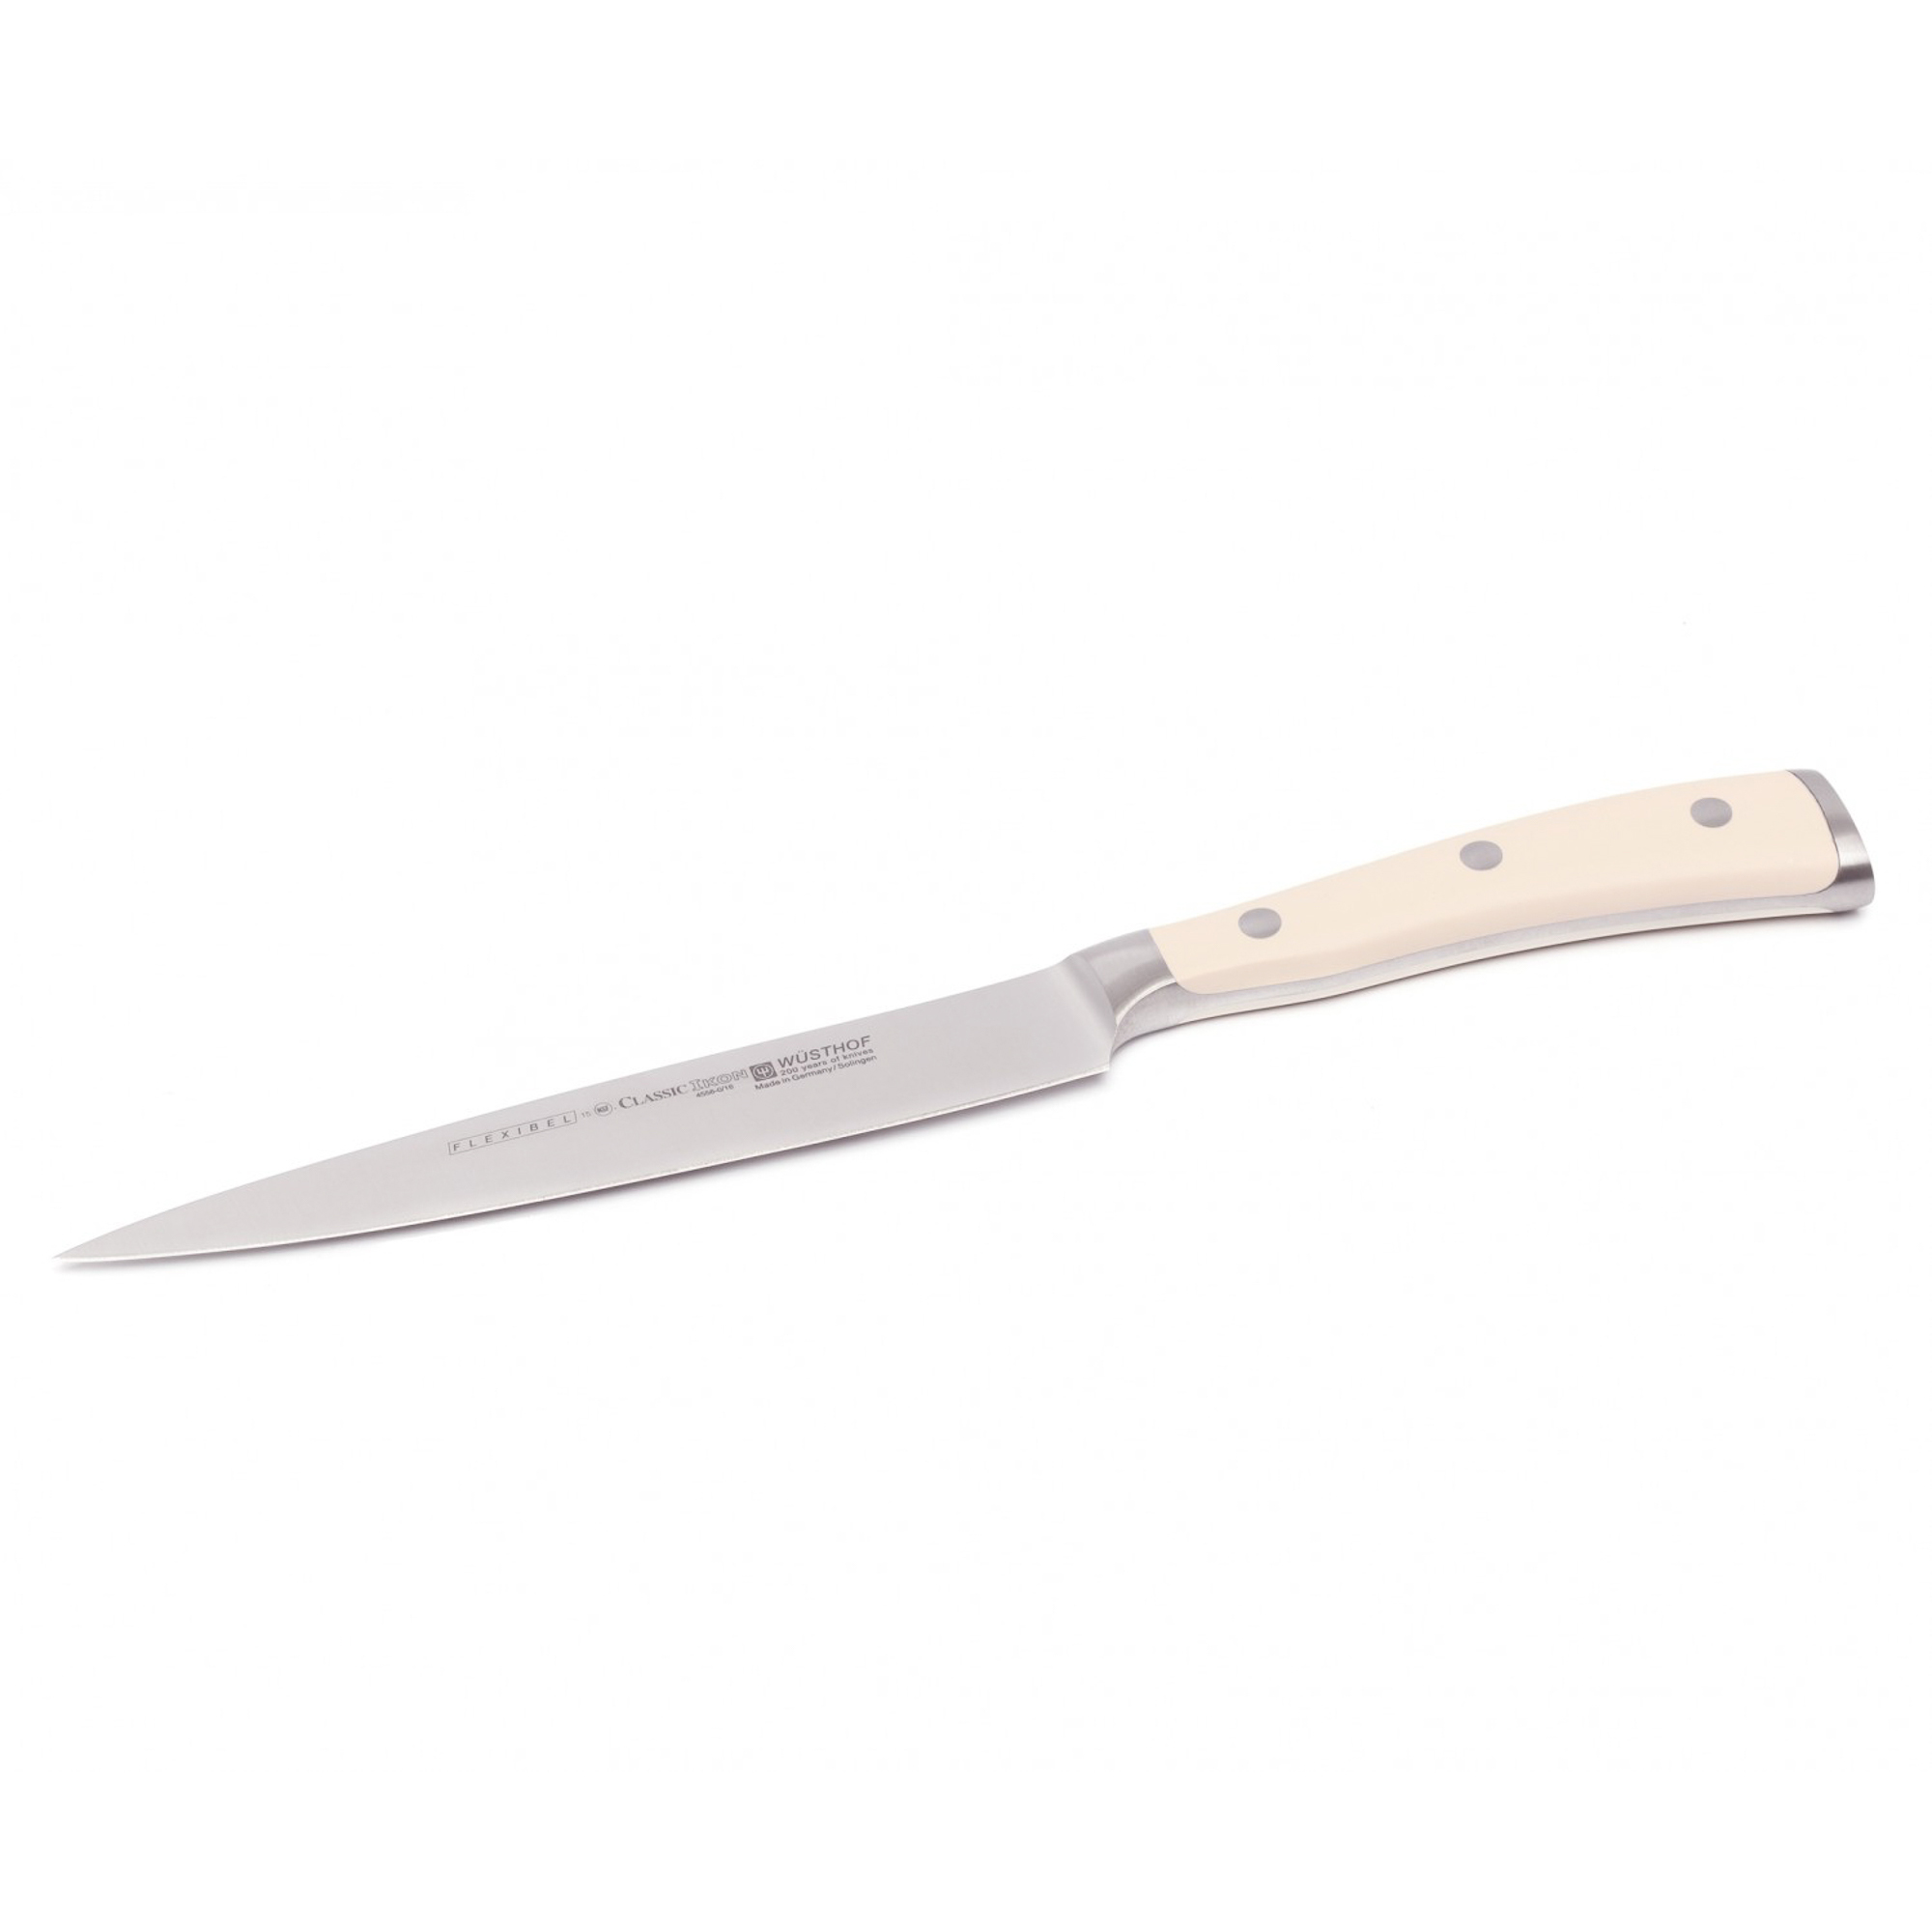 Нож Филейный гибкий 16 см Wusthoff - фото 1